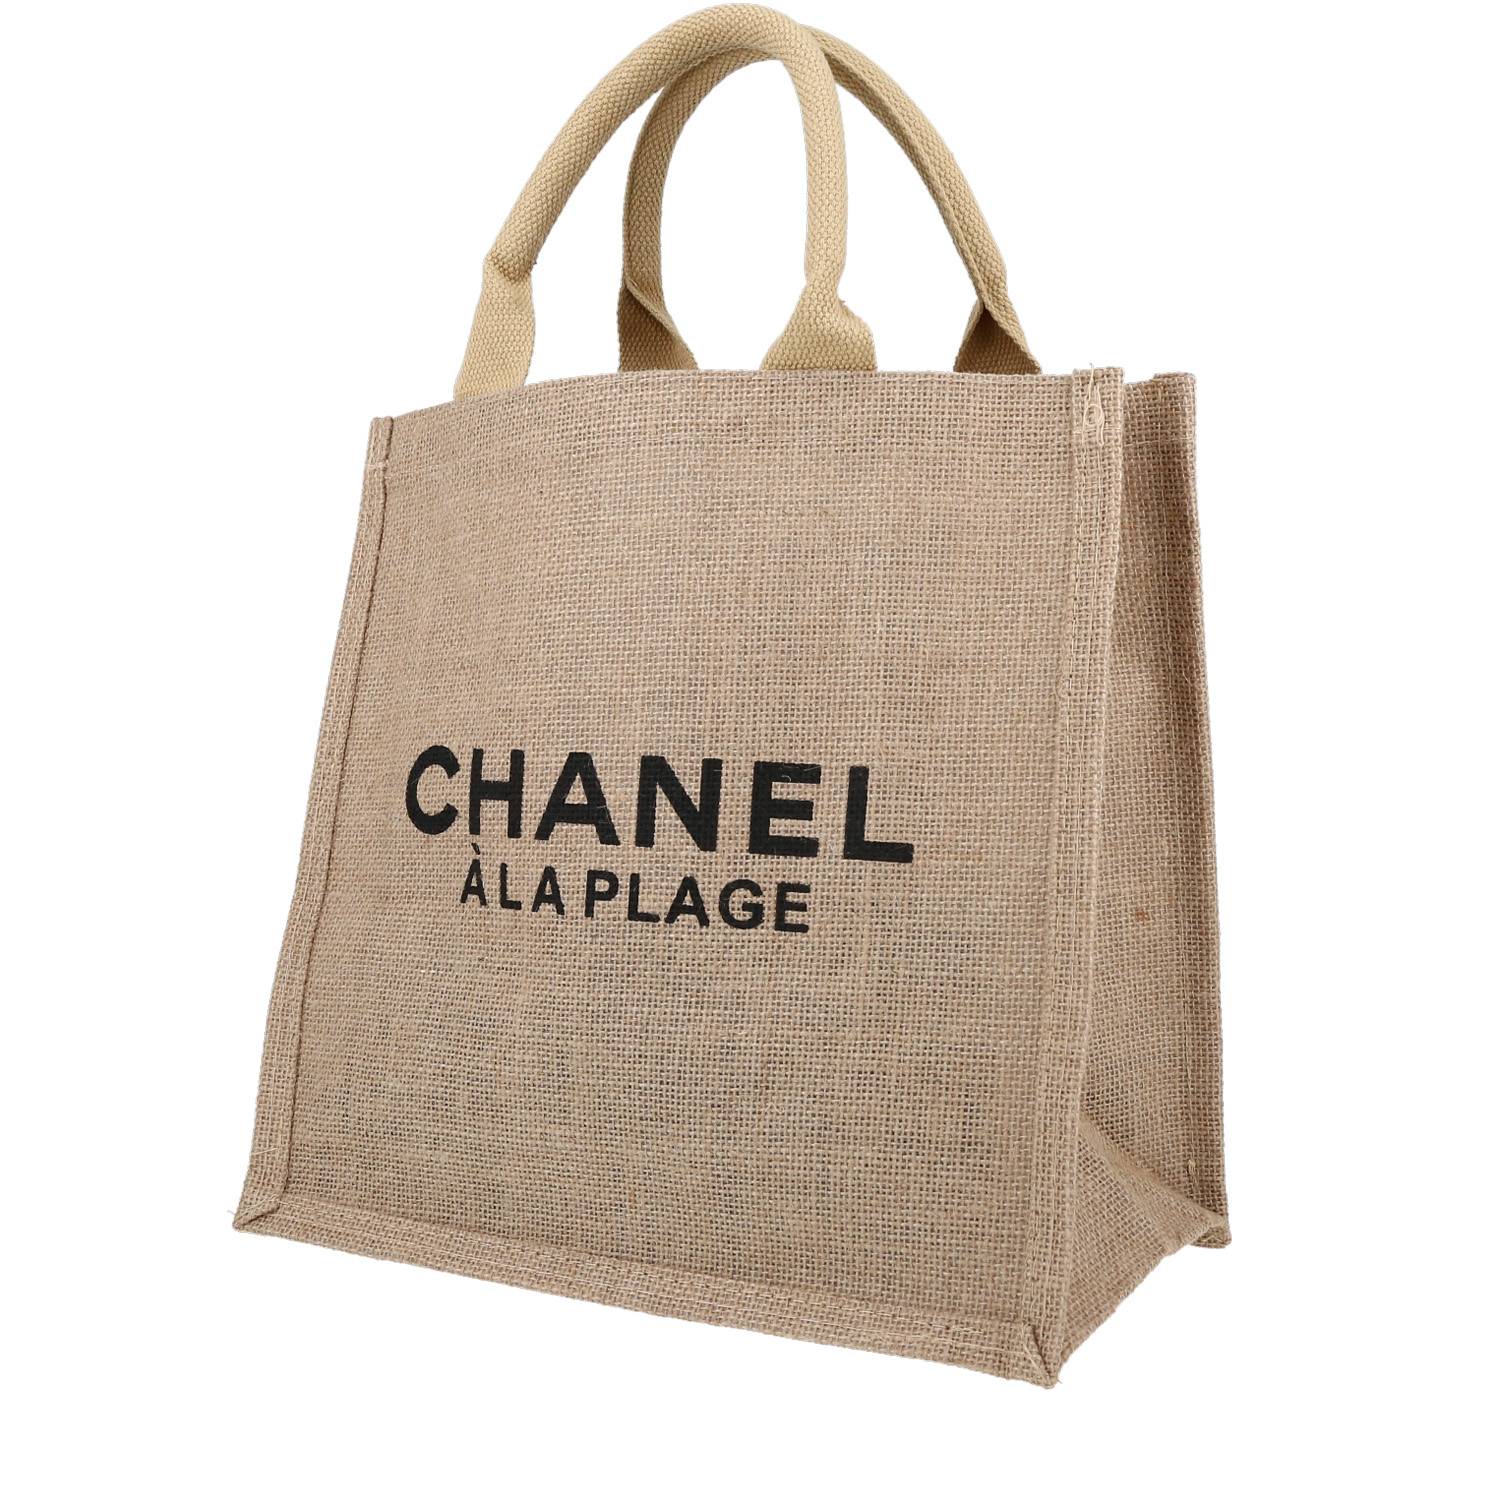 Chanel Shopping Bag in Beige Jute Canvas